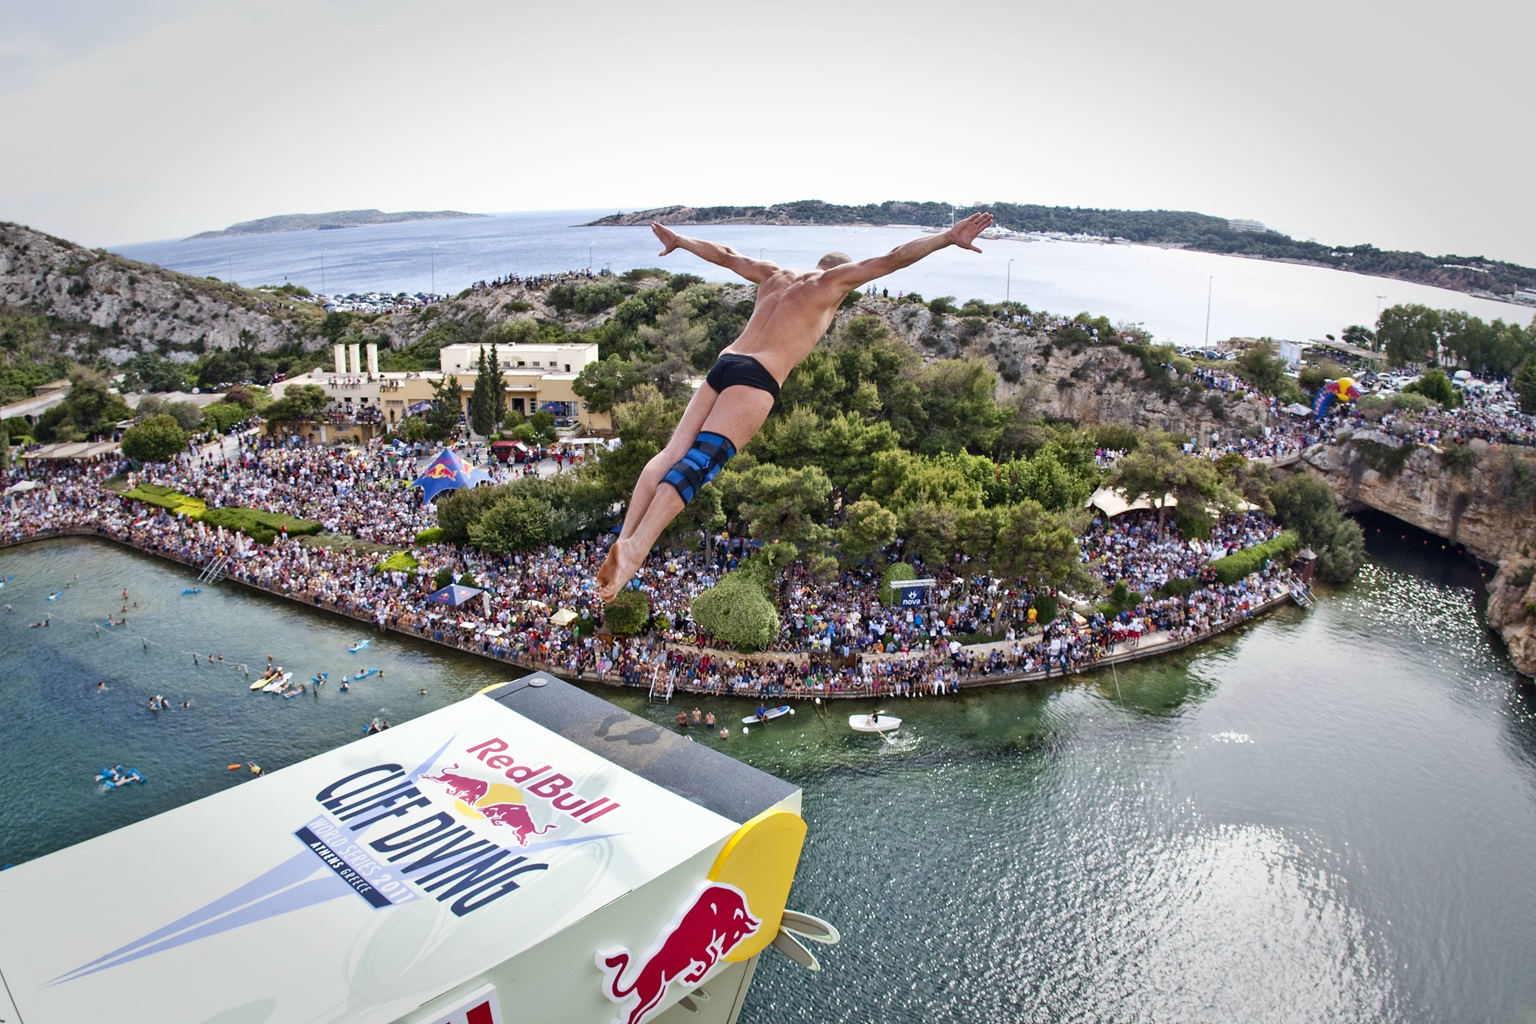 Red Bull Cliff Diving: Το πιο θεαματικό event της χρονιάς έρχεται σε 2 μόνο ημέρες